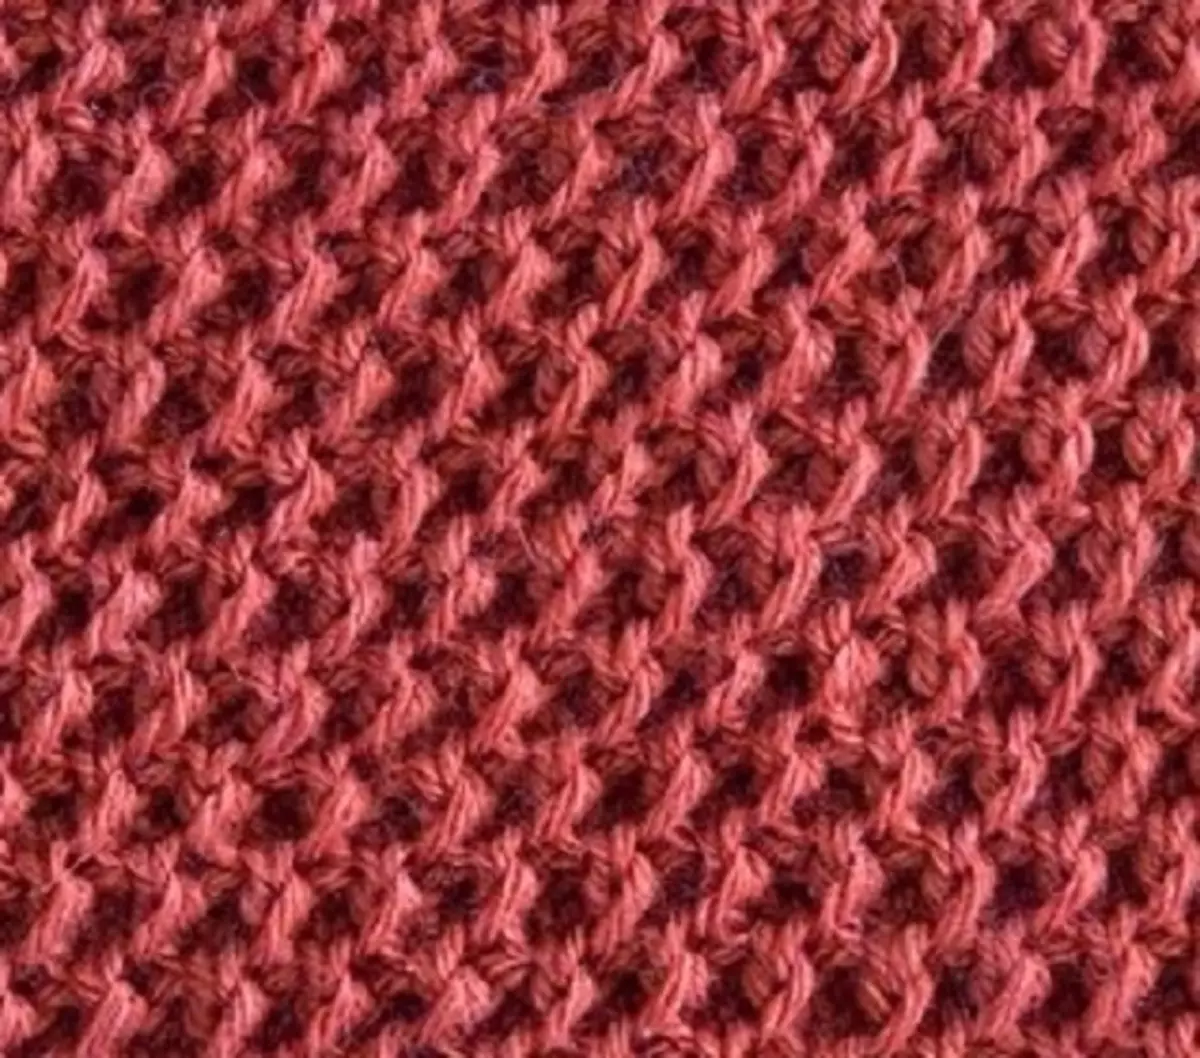 Body Knitting Knitting Caps: schemi con video